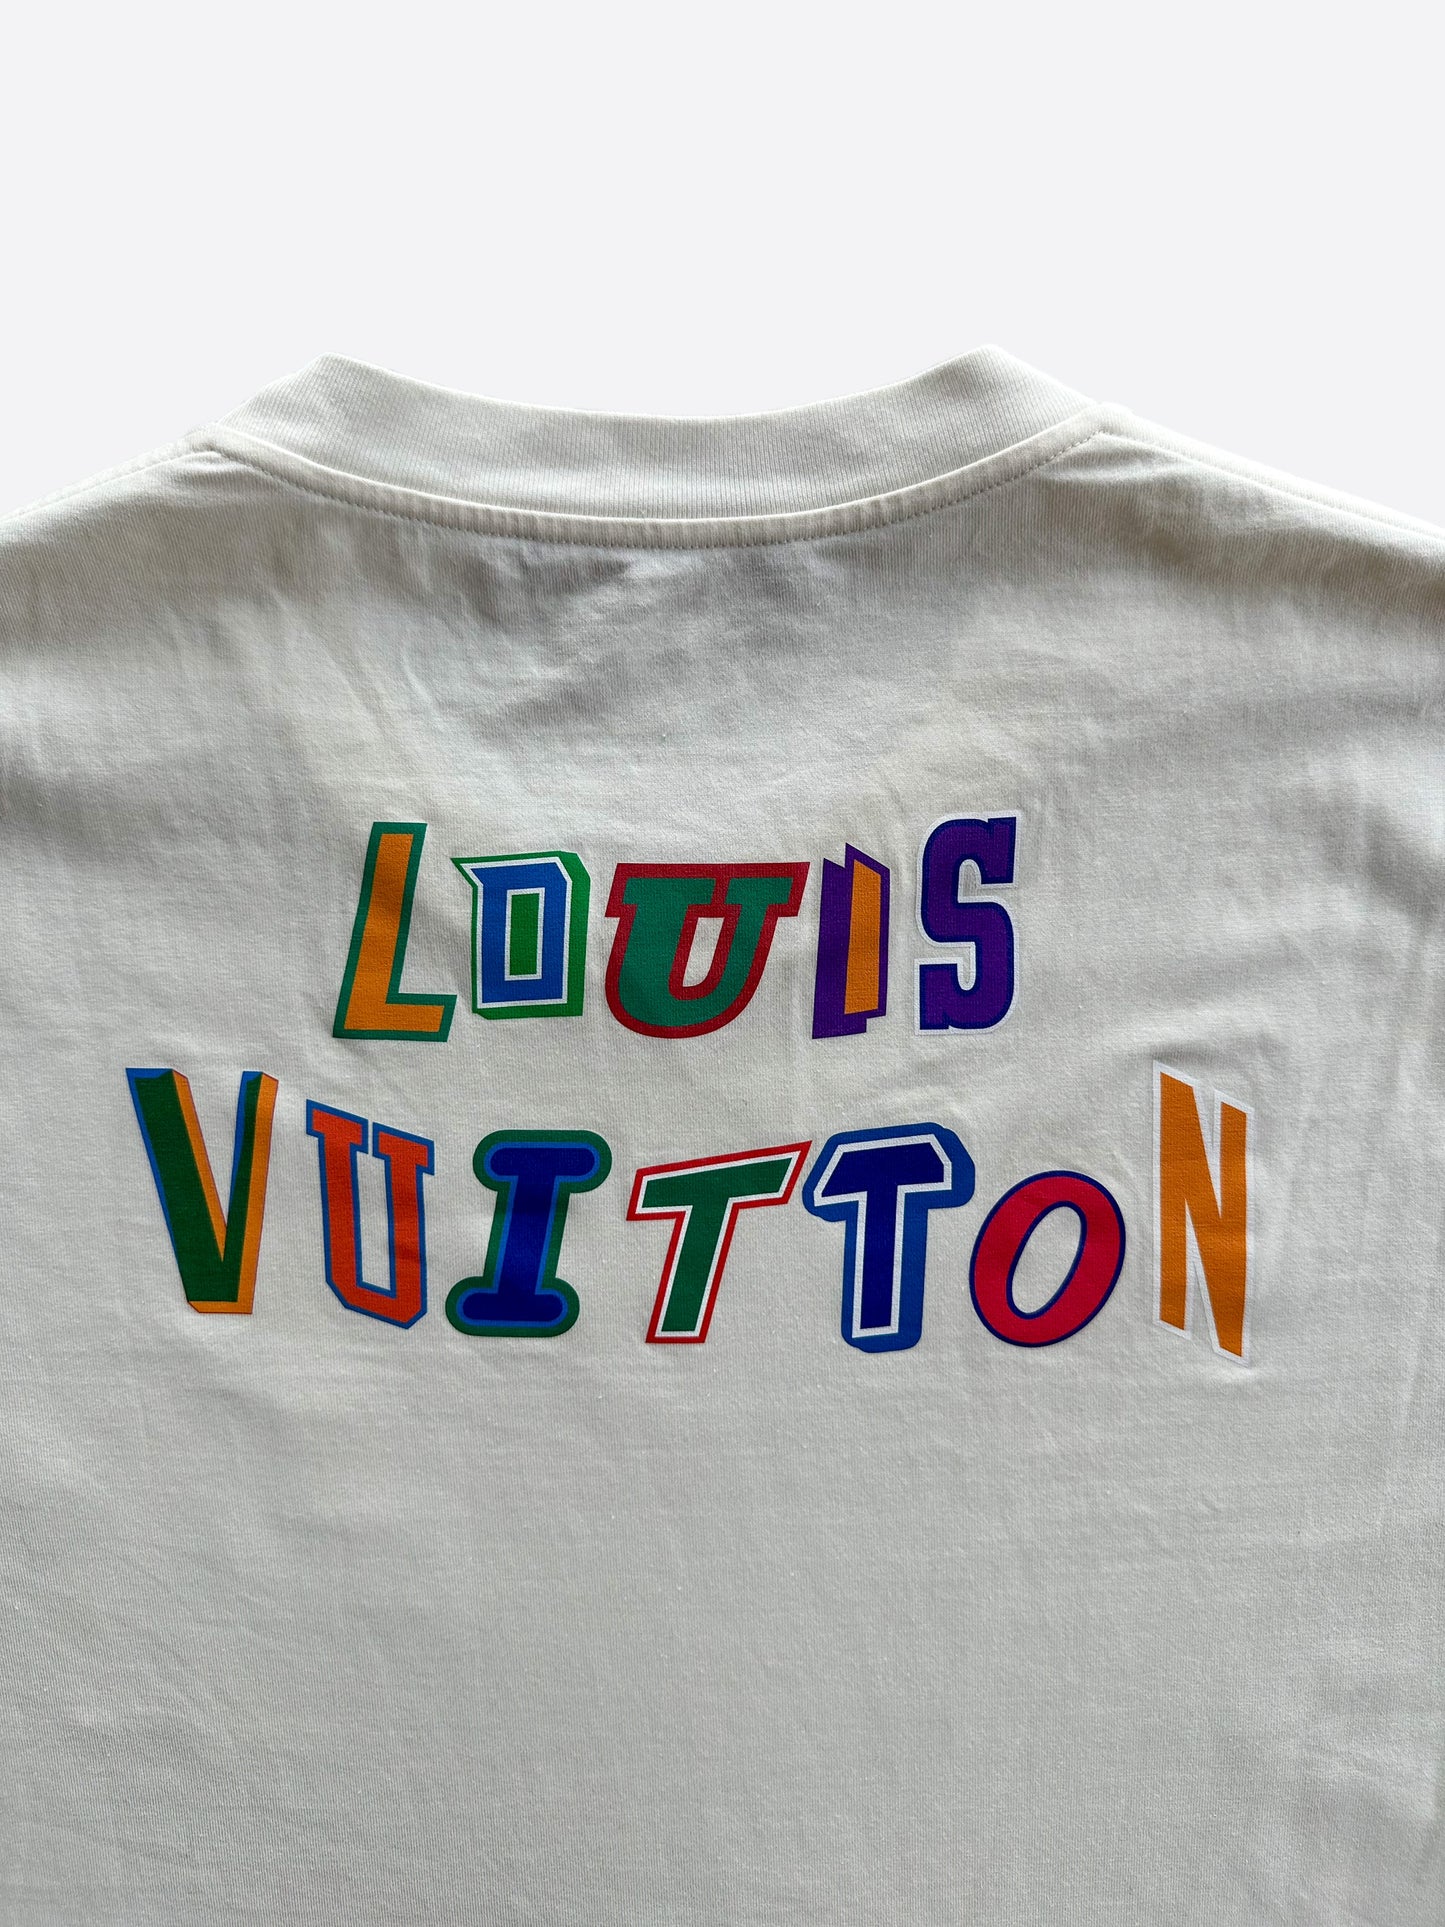 Louis Vuitton Reflective T-shirt